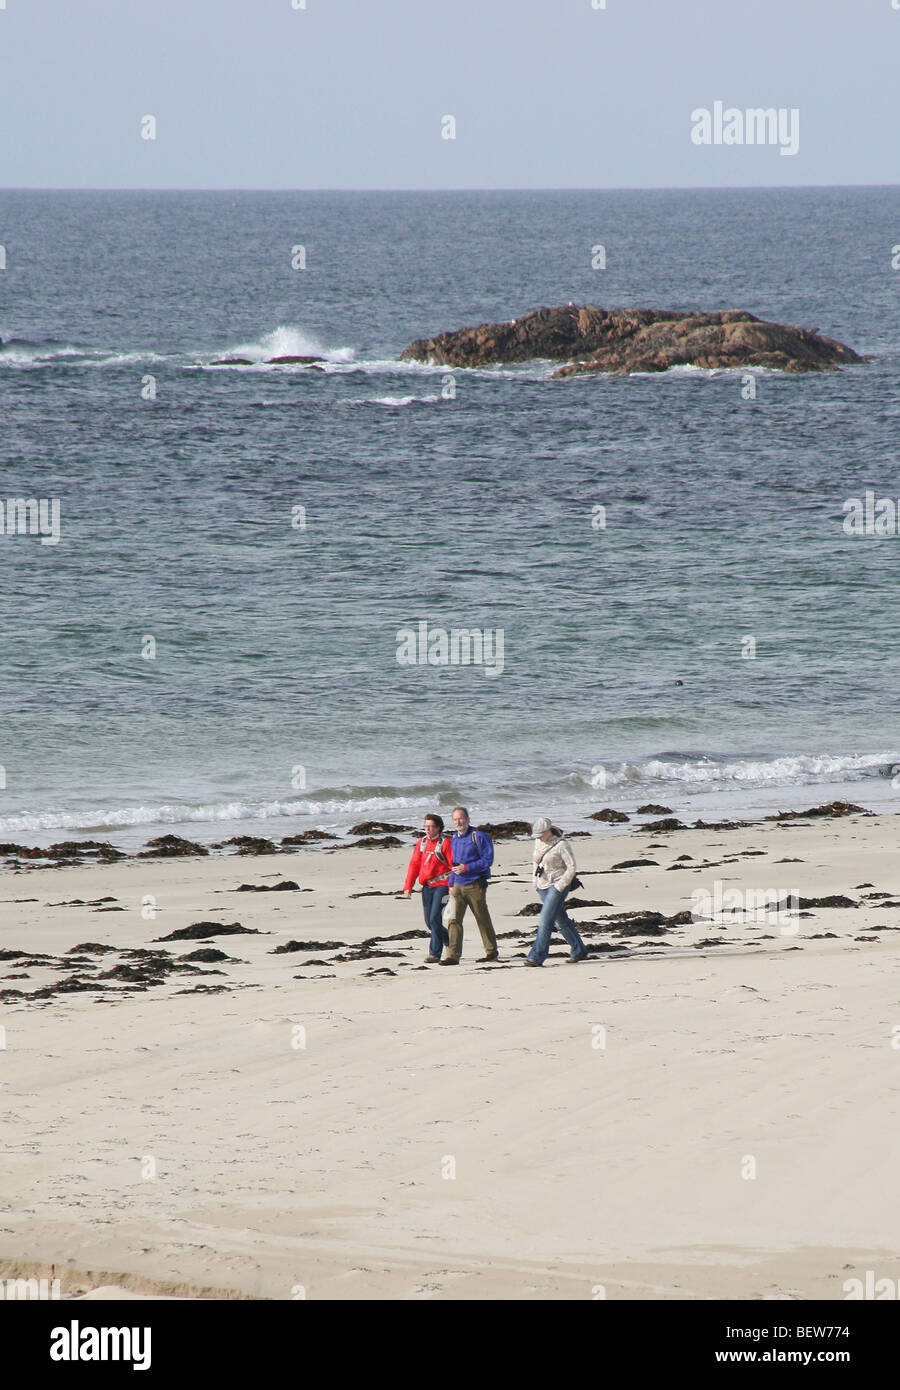 Walkers on the beach Cliad on the hebridean island of Coll, Scotland Stock Photo